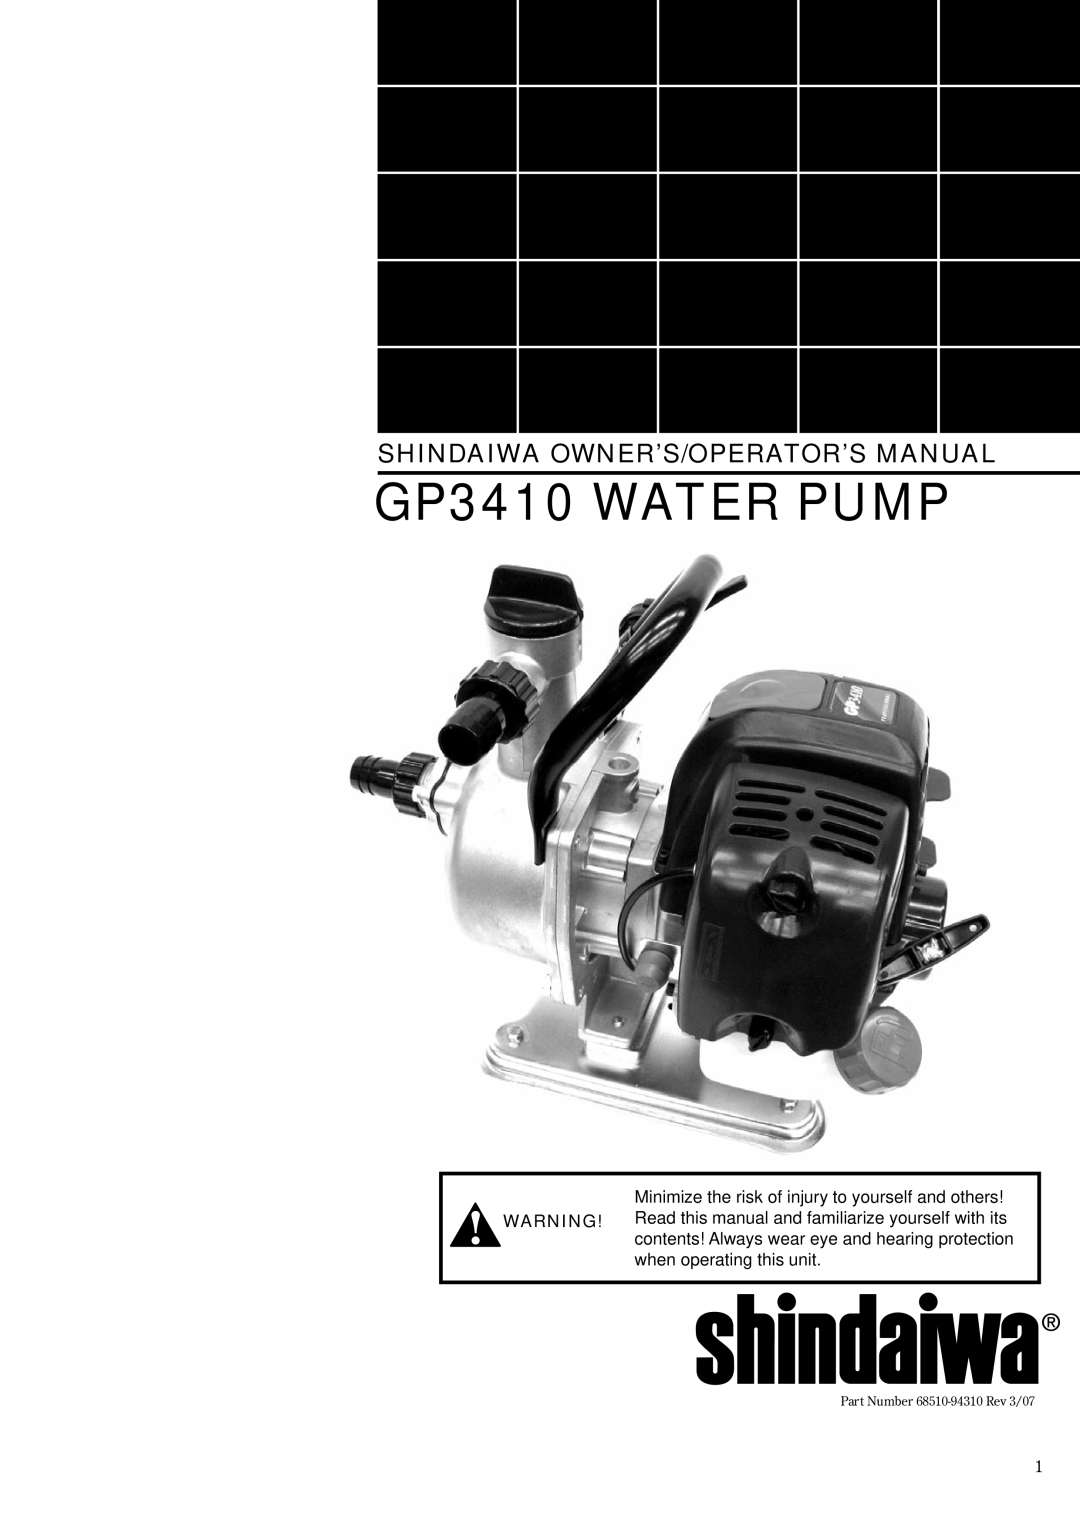 Shindaiwa 6850-9430 manual GP3410 WATER PUMP, Shindaiwa Owner’S/Operator’S Manual 